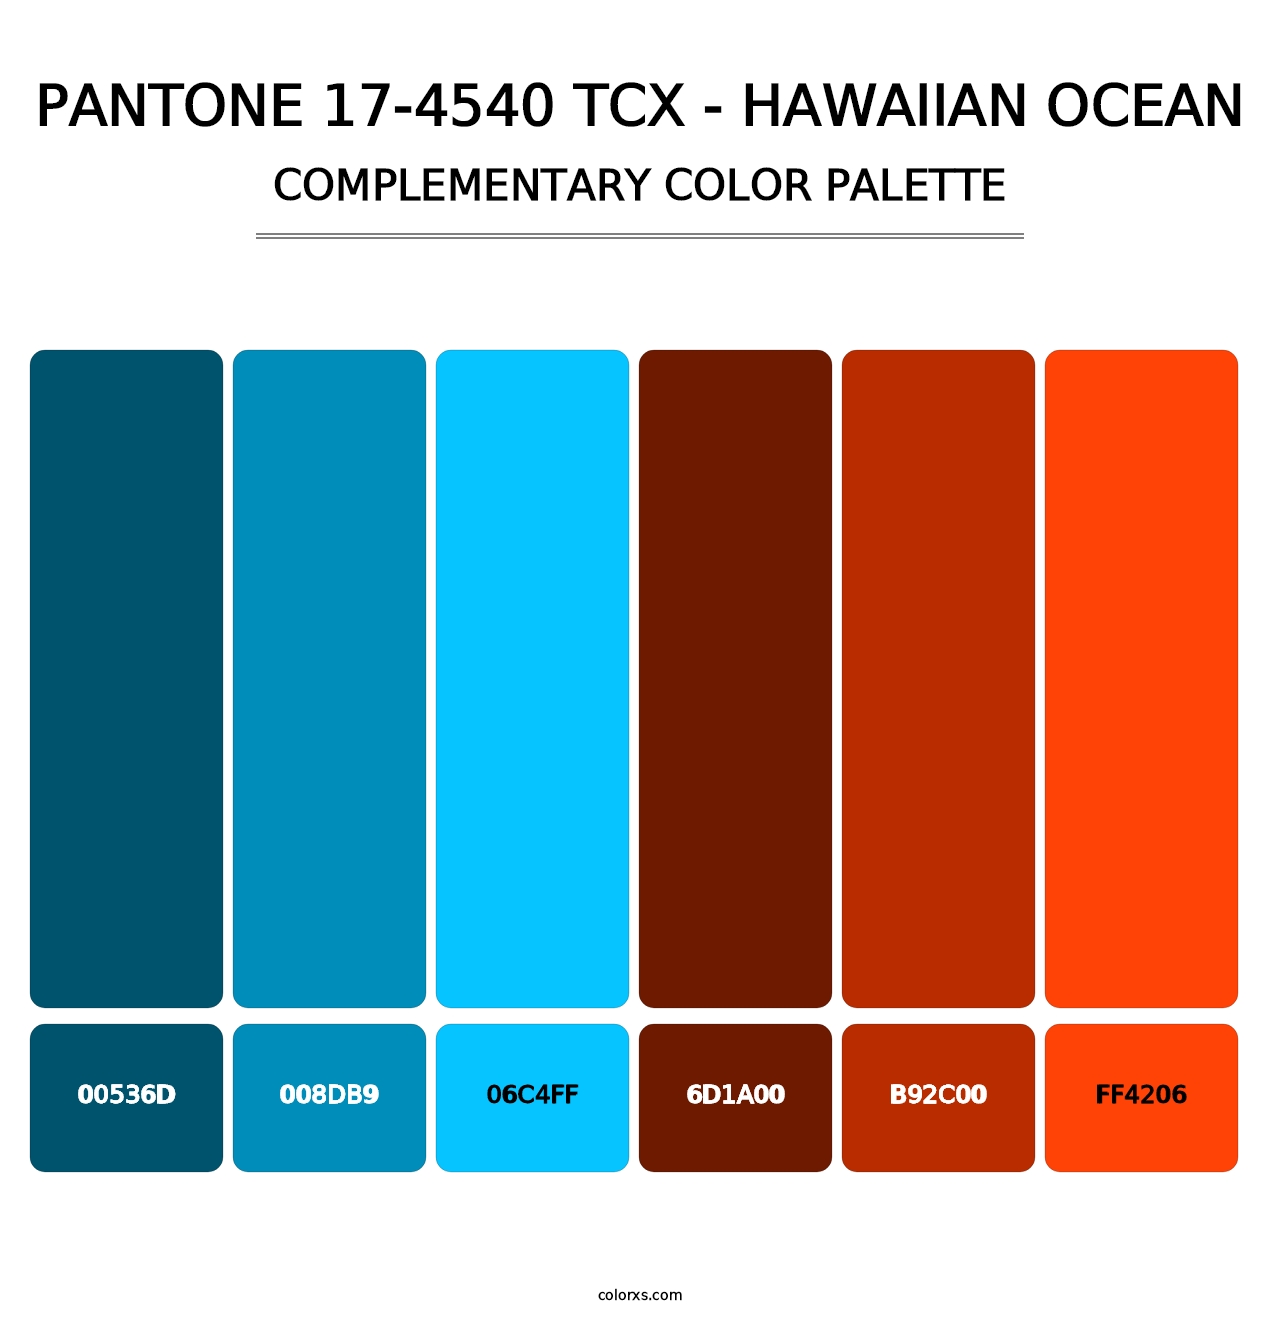 PANTONE 17-4540 TCX - Hawaiian Ocean - Complementary Color Palette